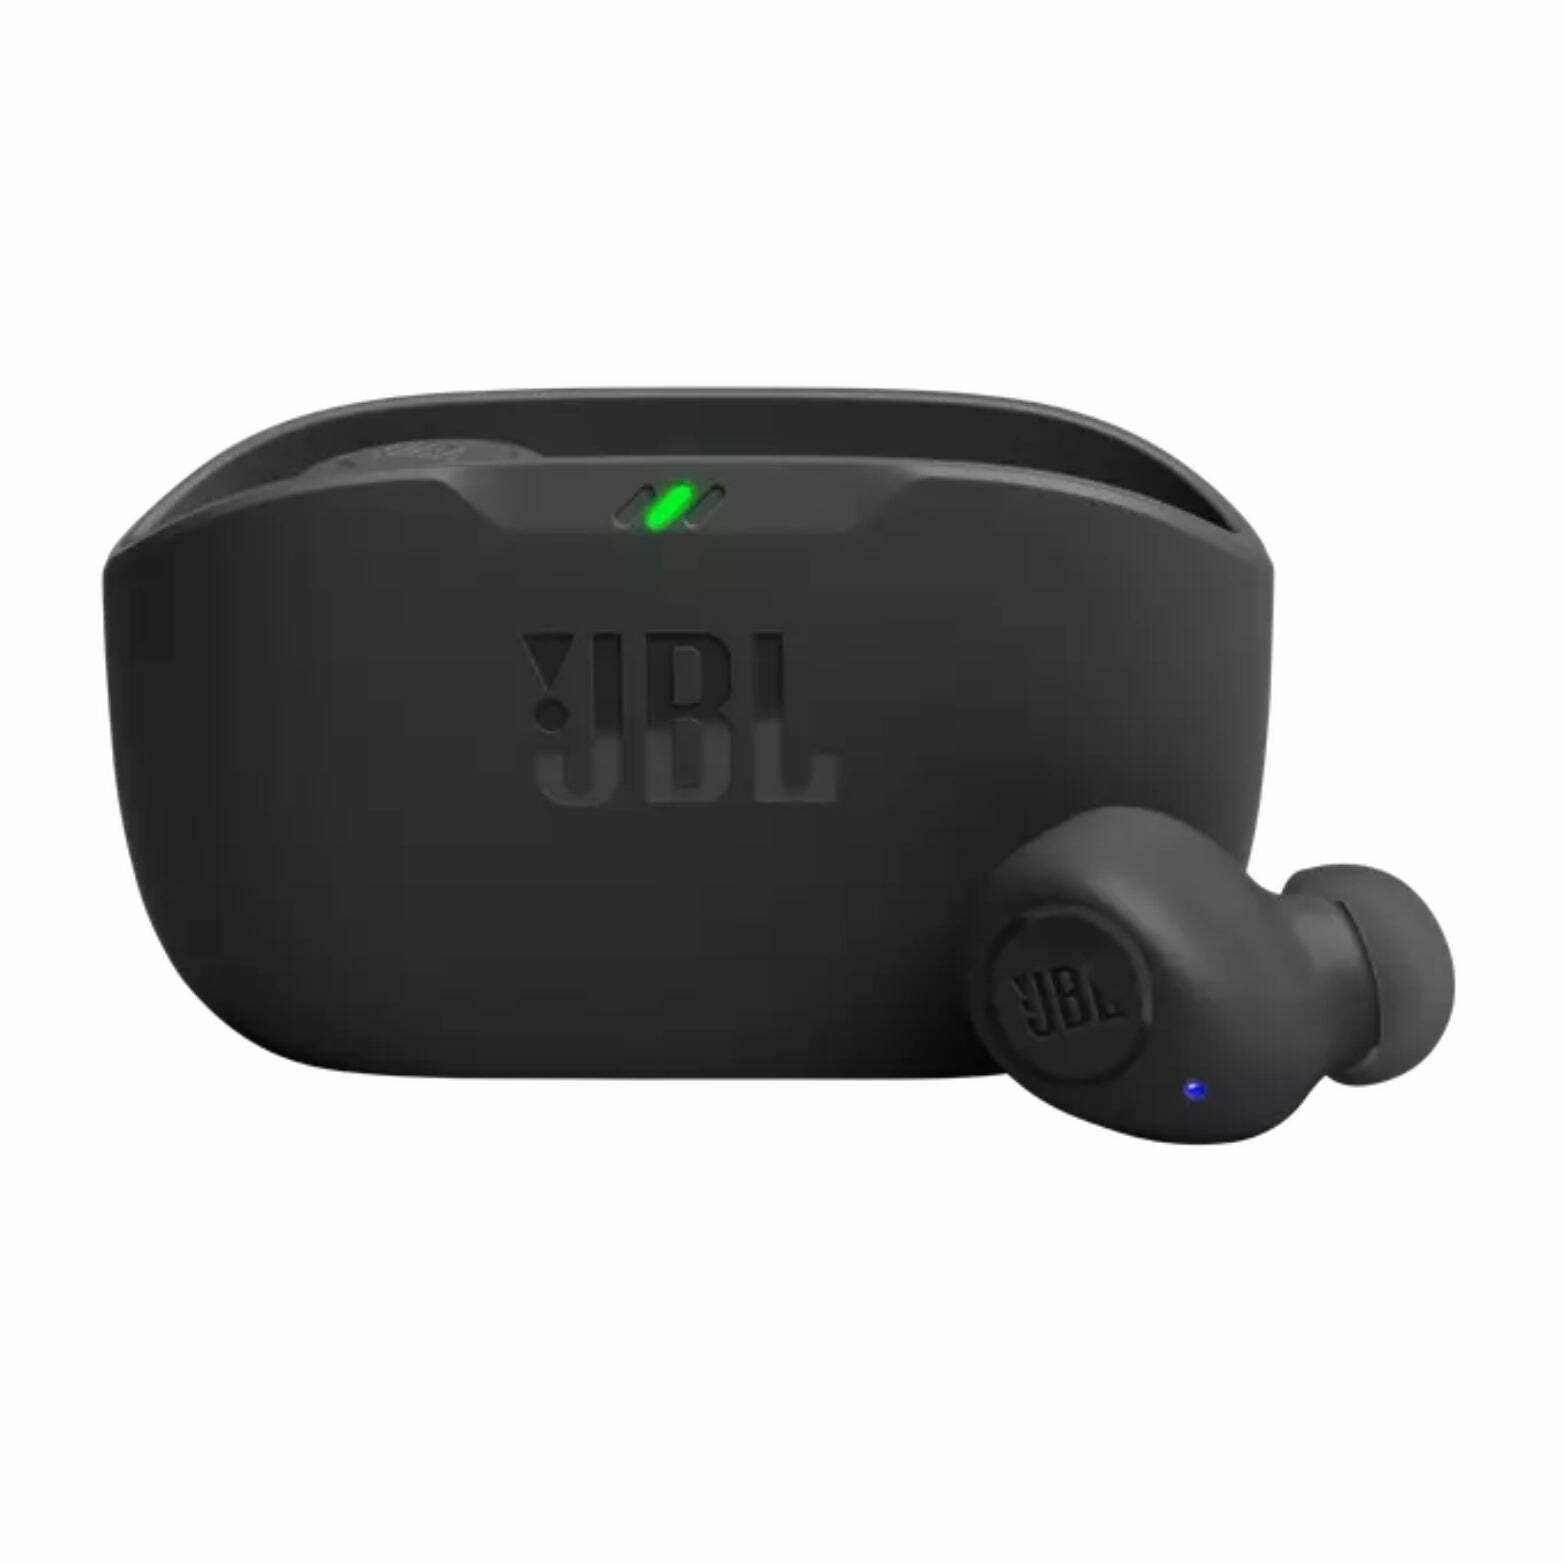 JBL Wave Buds True Wireless Bluetooth Earbuds Headphones w/ Mic